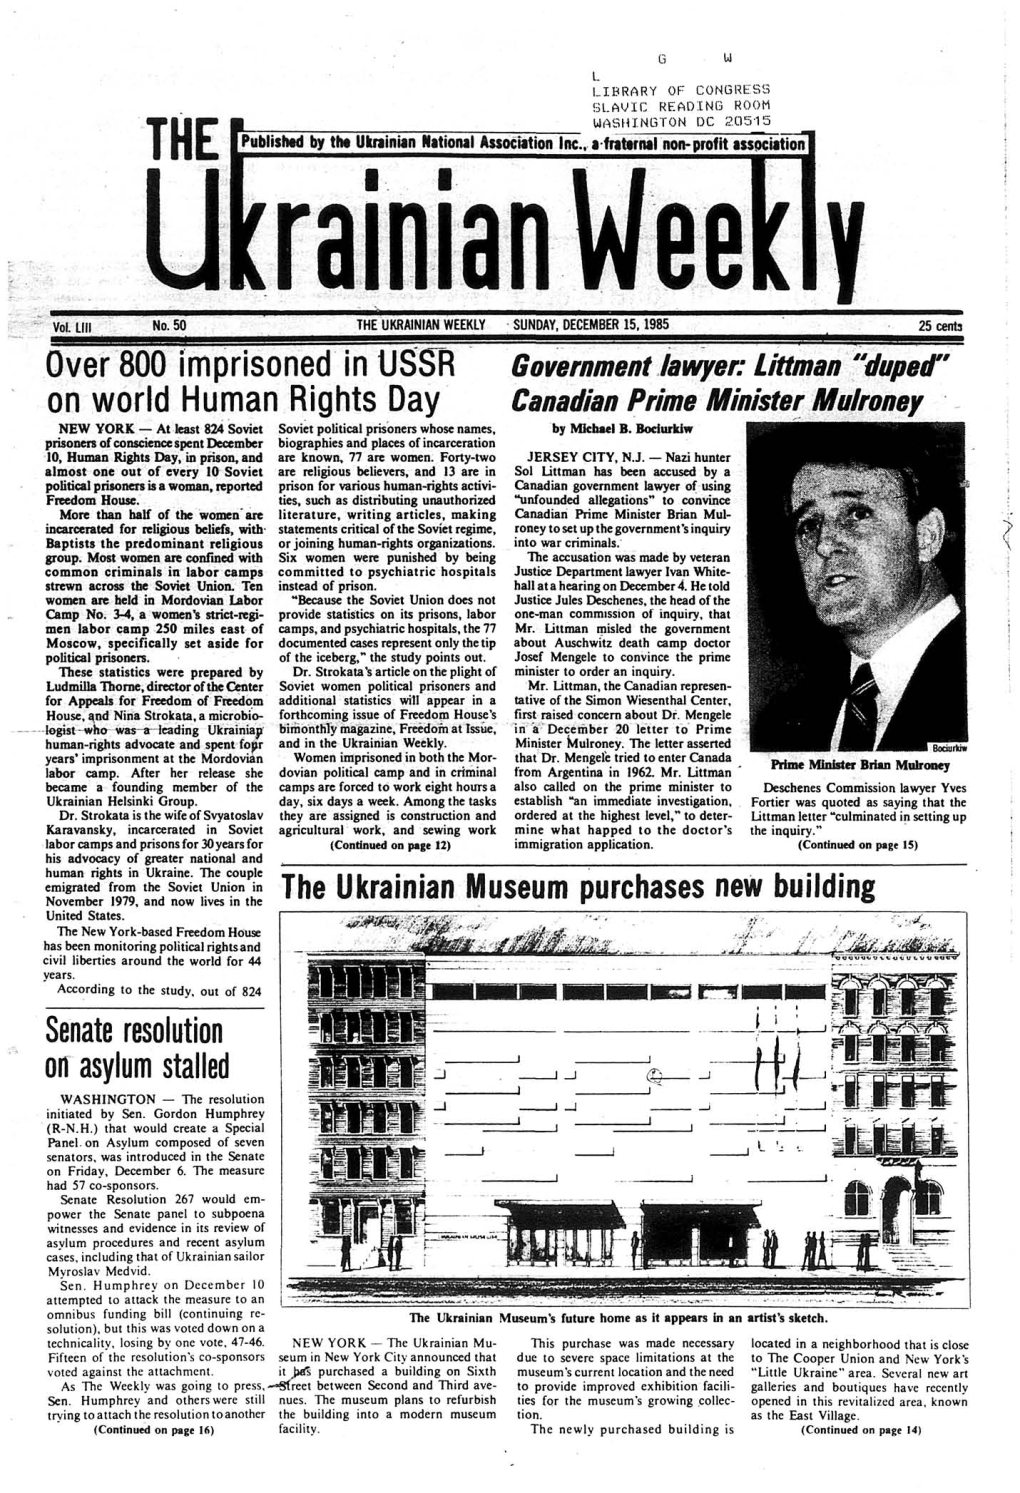 The Ukrainian Weekly 1985, No.50